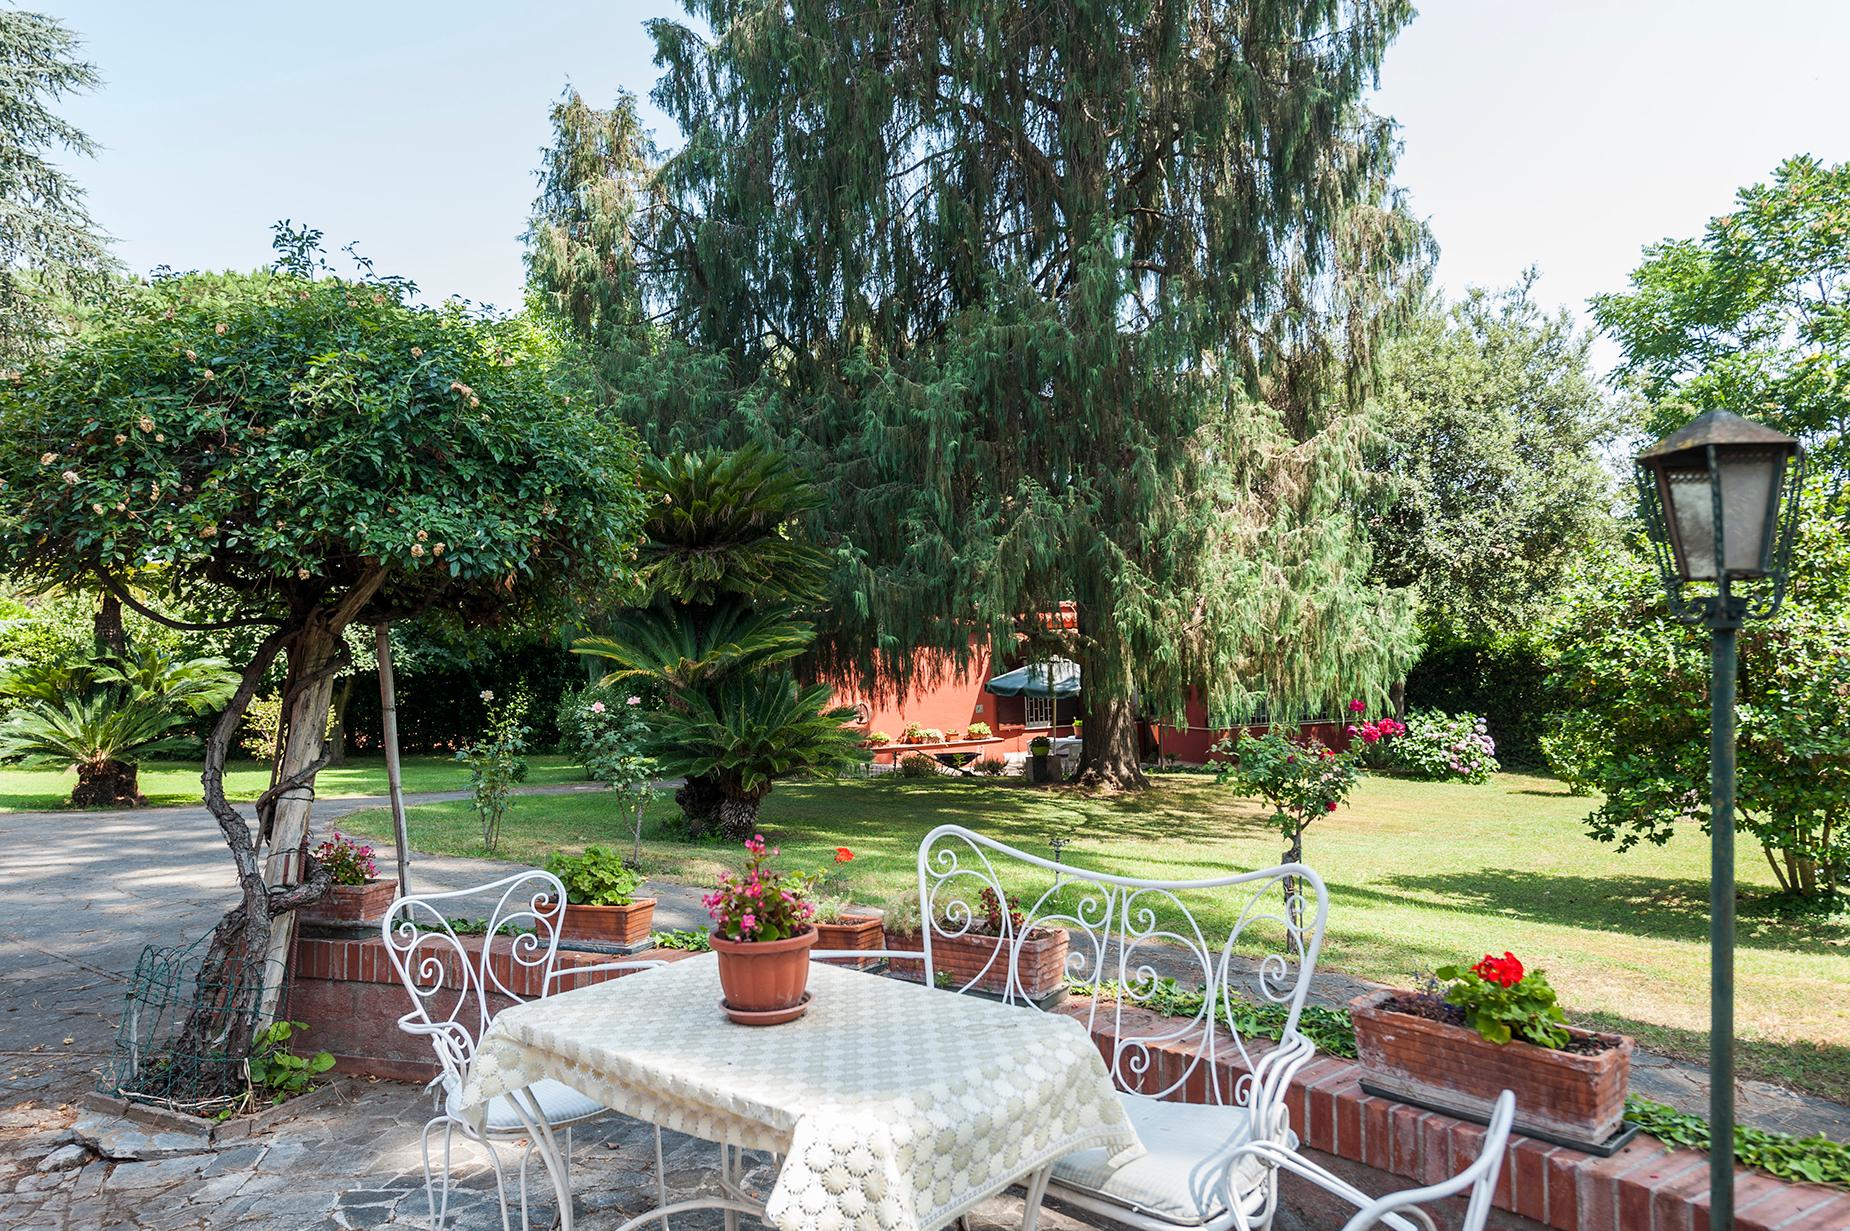                                                     Beautiful villa with large garden near Via Appia Antica                                                     - 22